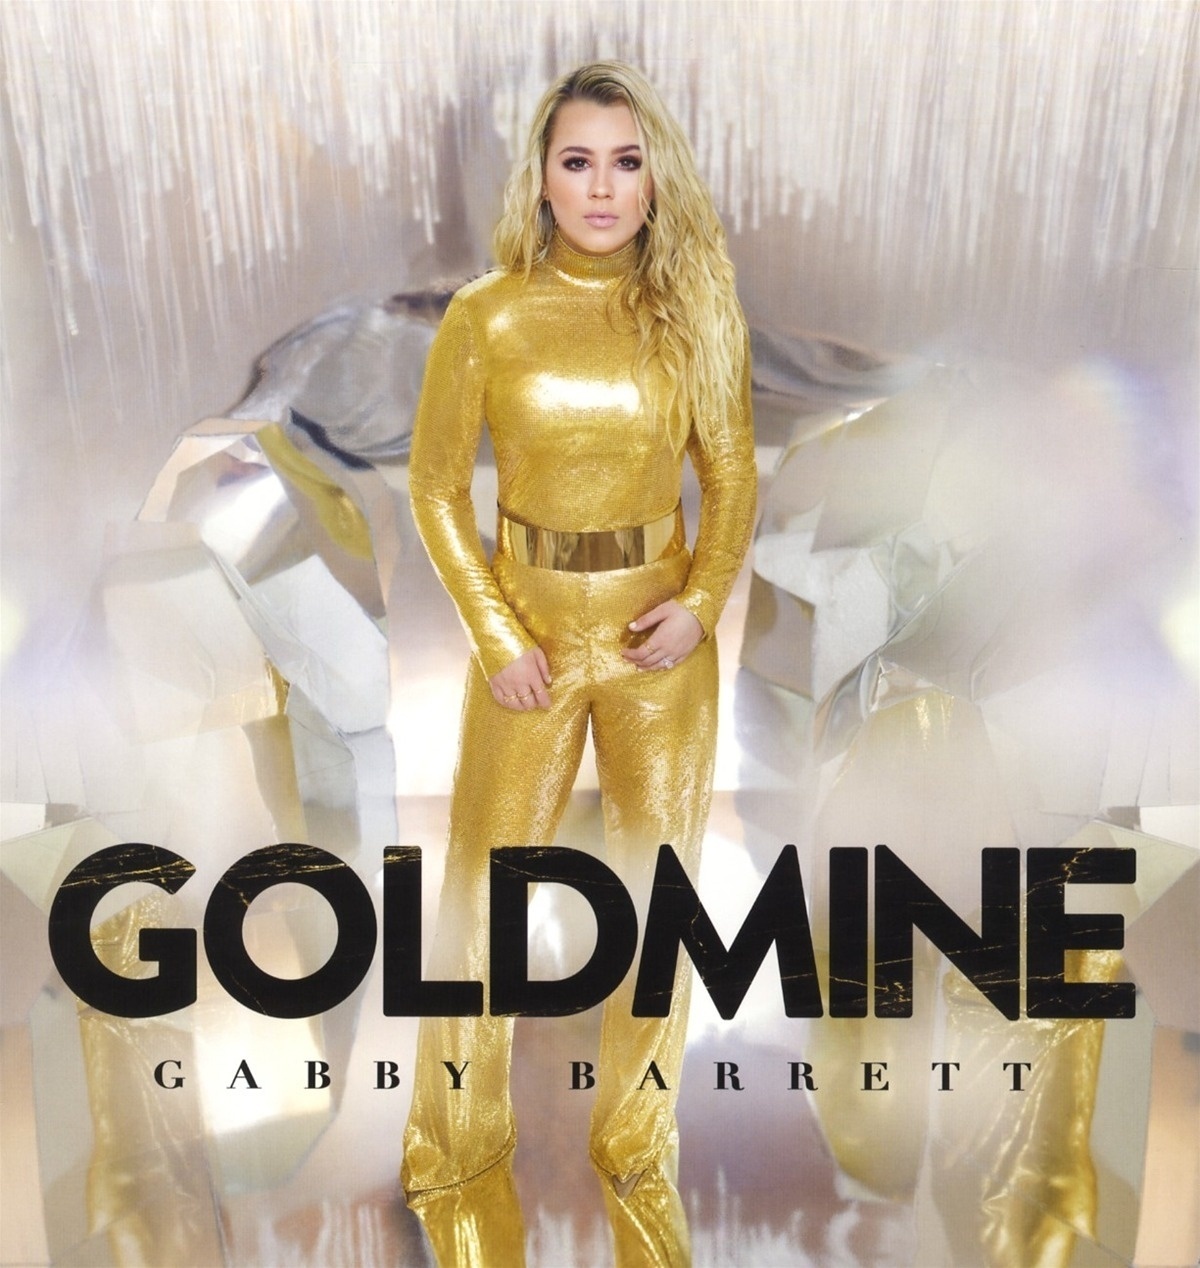 Goldmine (Vinyl) - Gabby Barrett. (LP)